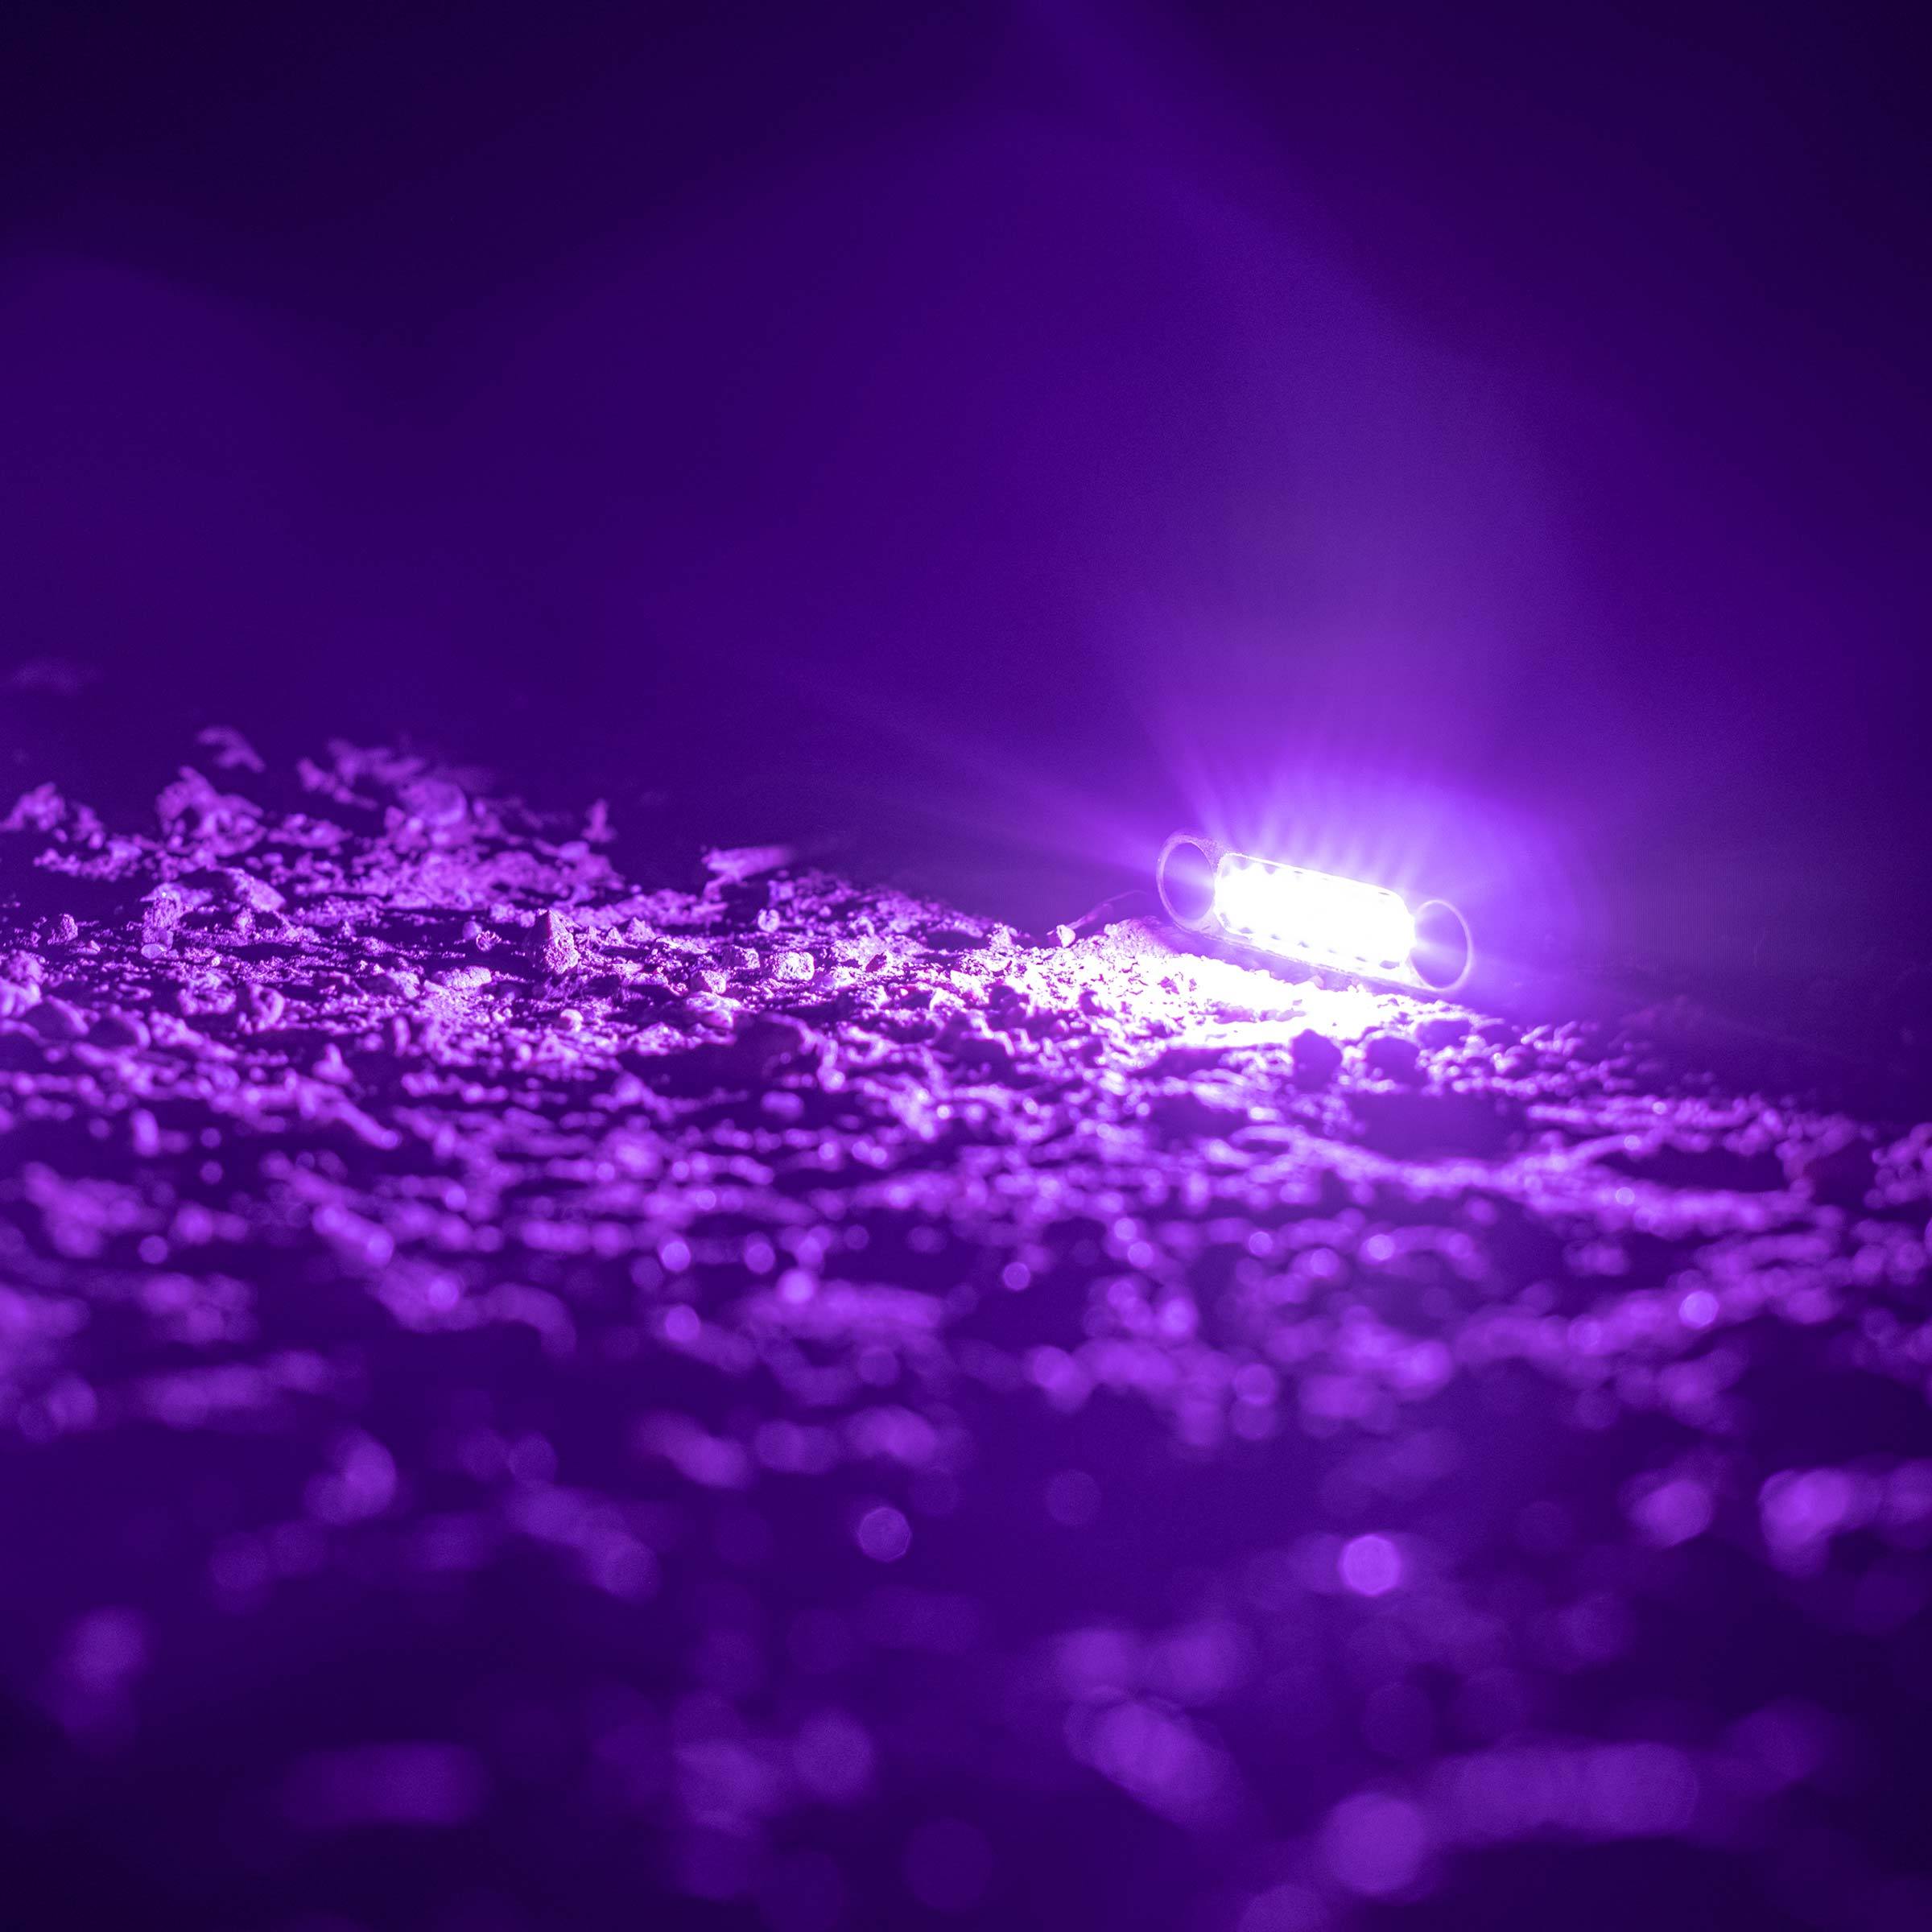 billet led rock light kit purple lights for truck jeep utv polaris rzr can am maverick x3 made in usa 250+ lumens by litt industries